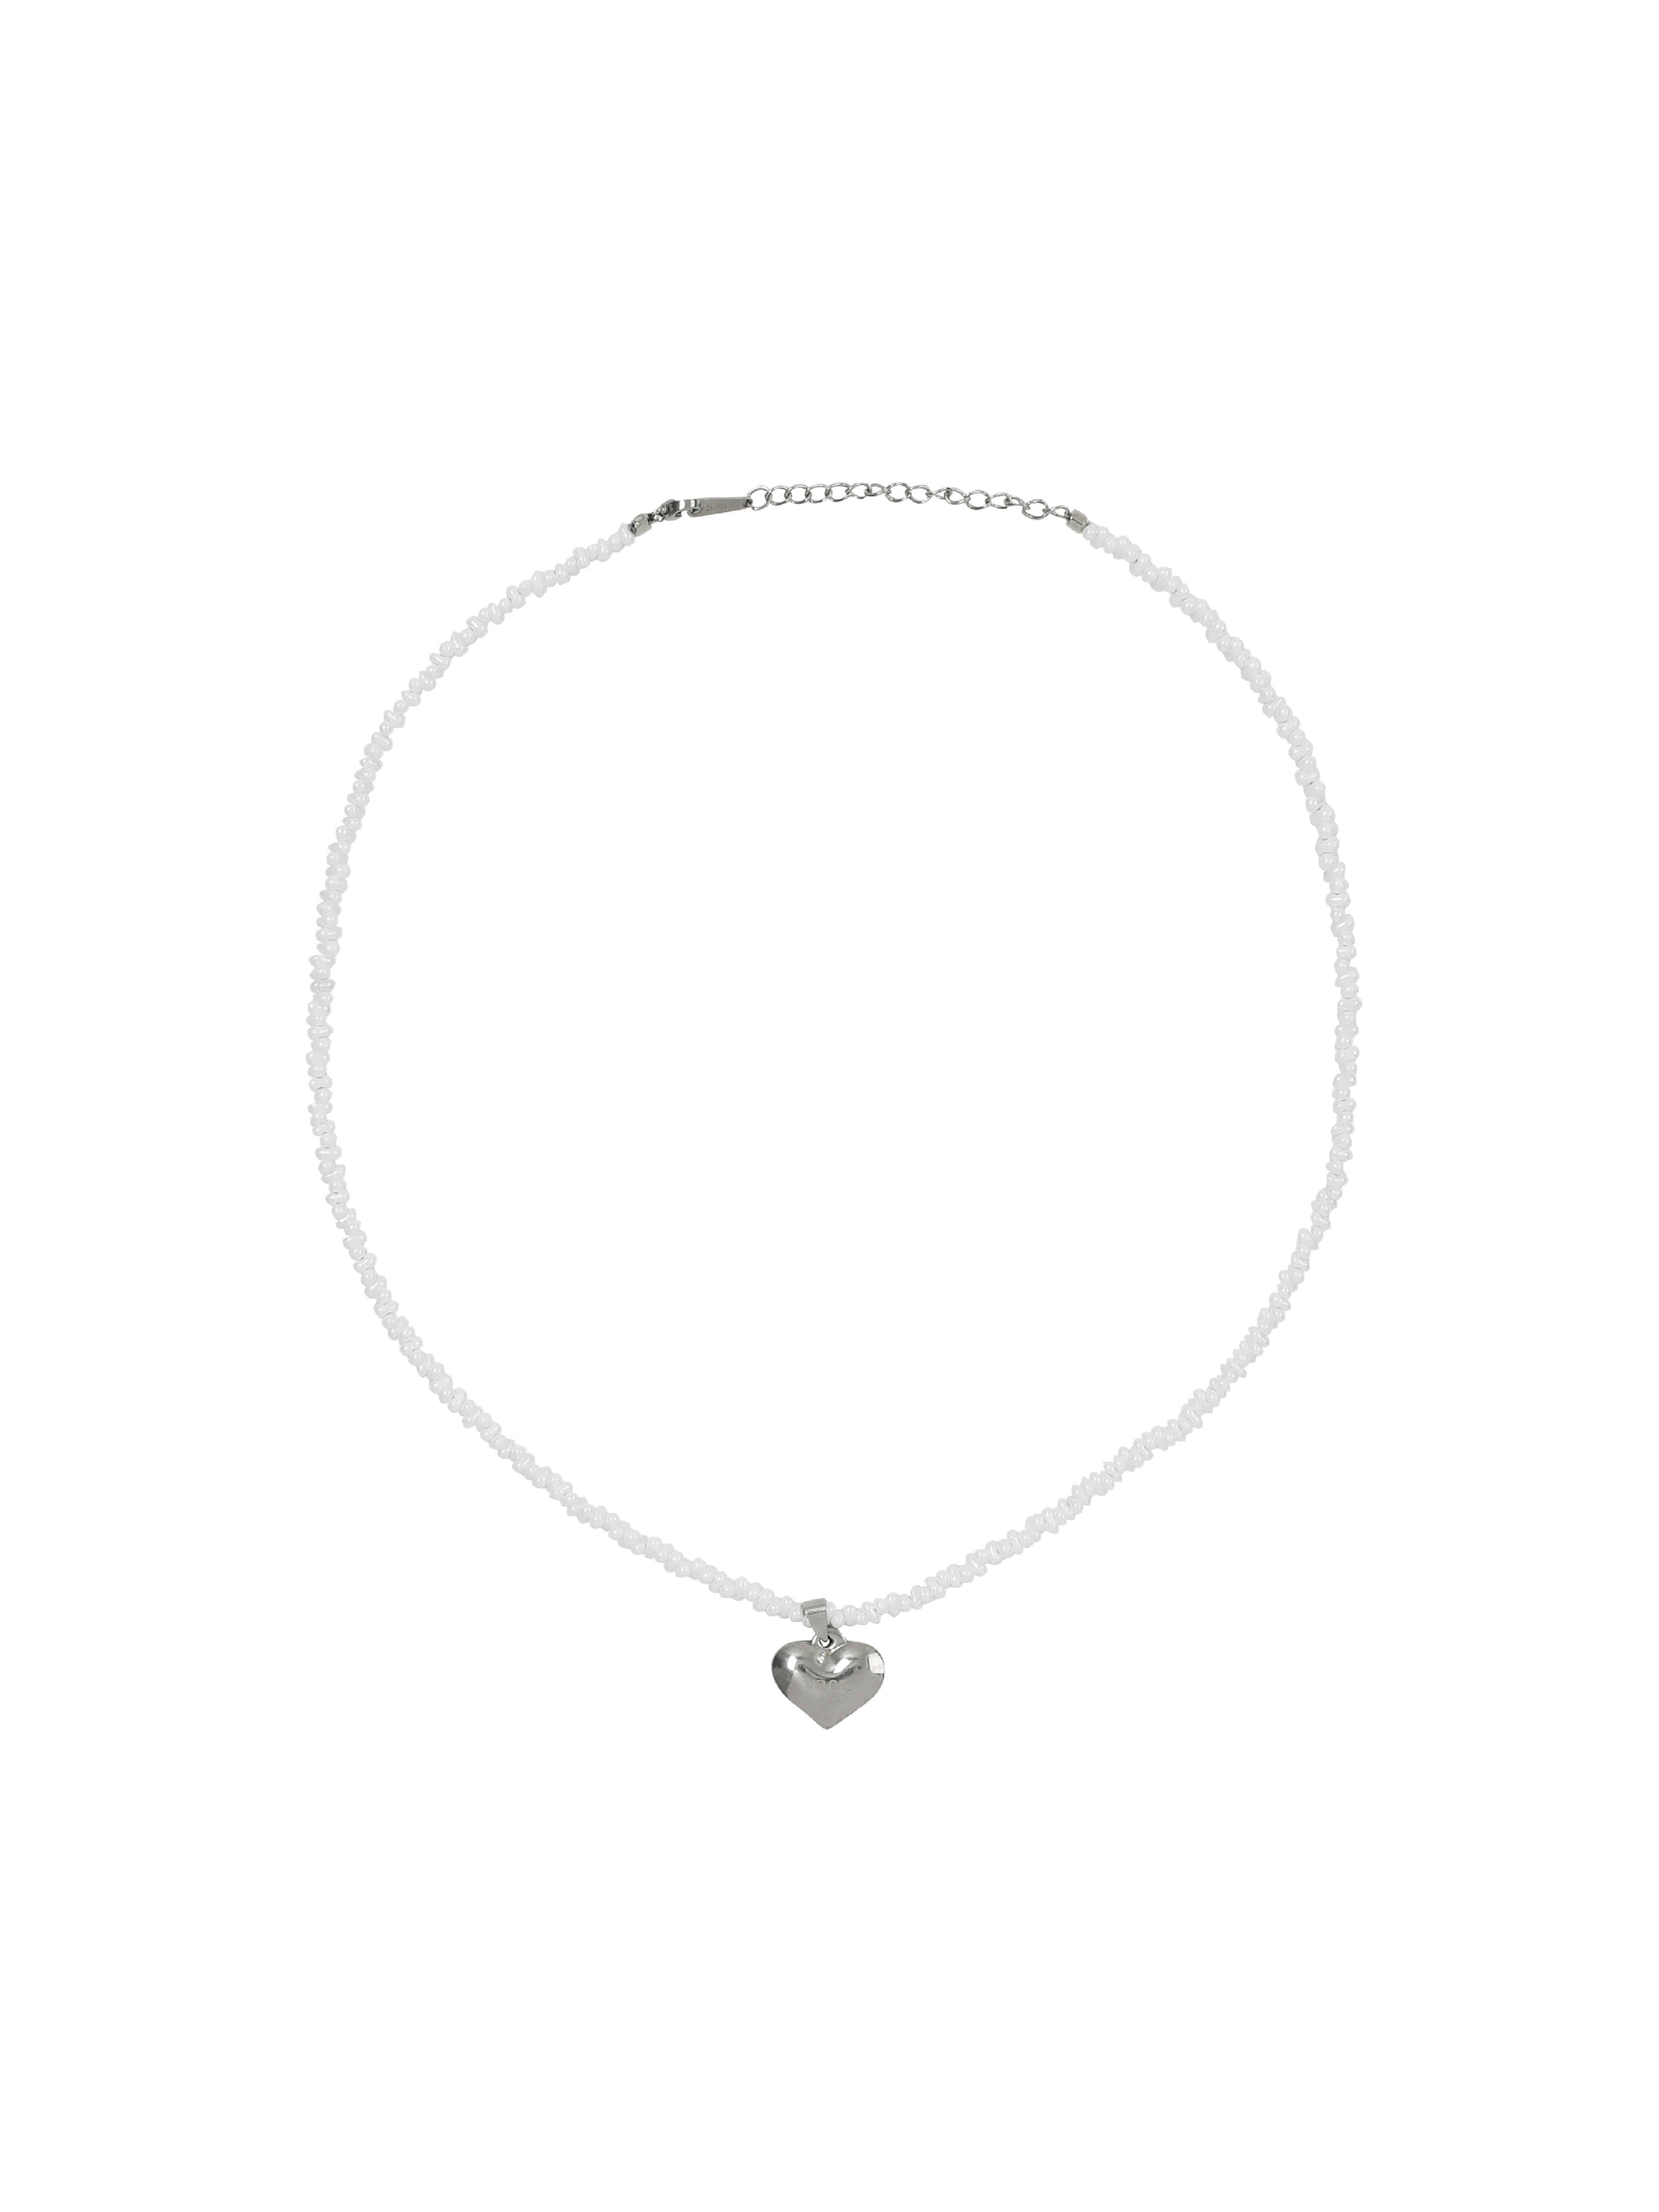 Peanut Heart Necklace - White